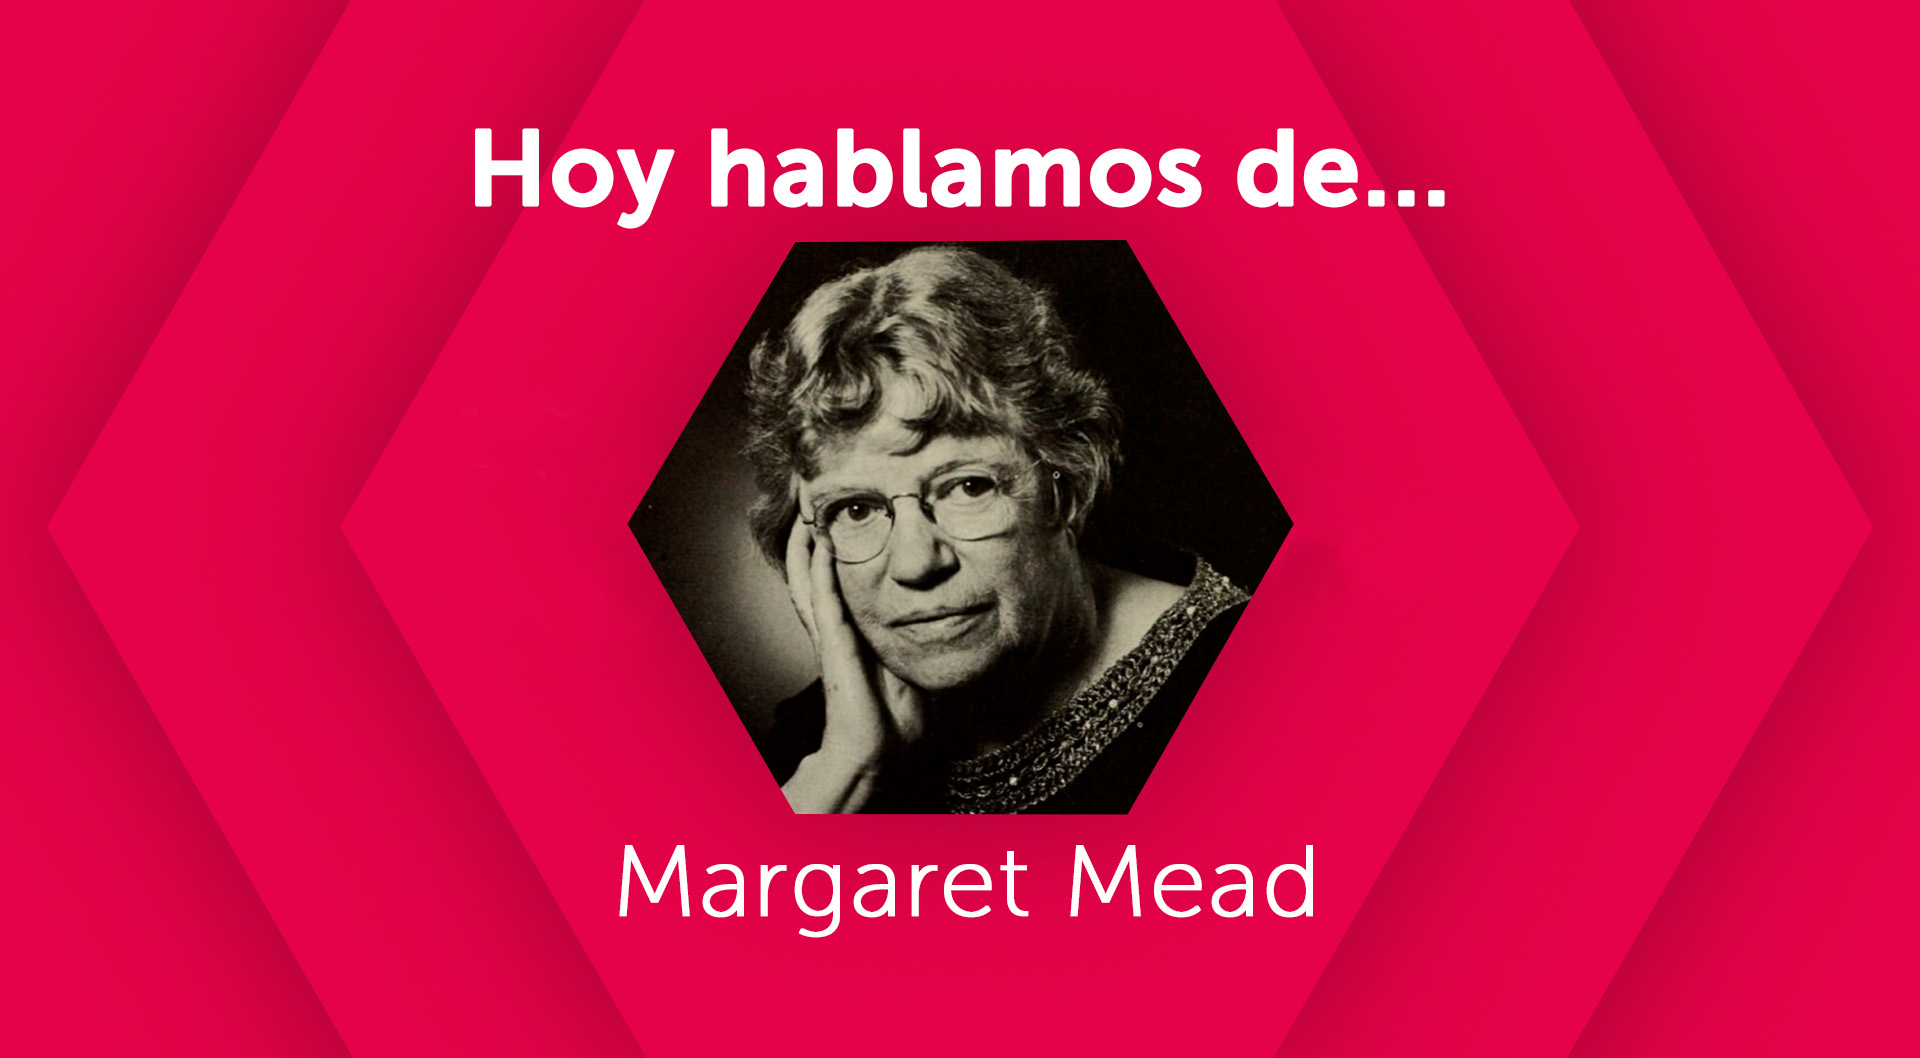 Hoy hablamos de Margeret Mead